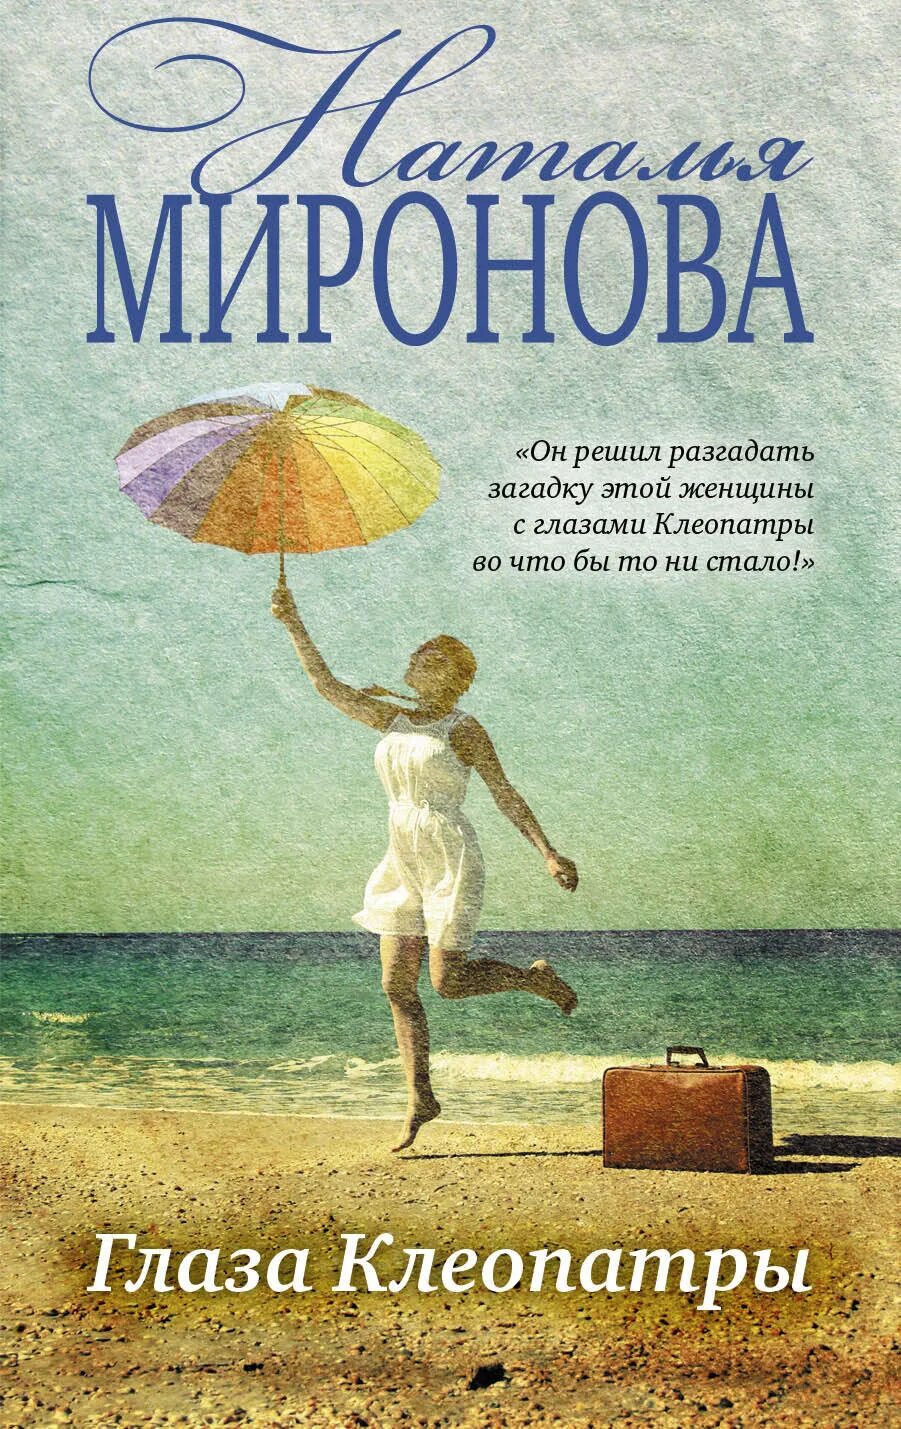 Книга Миронова.